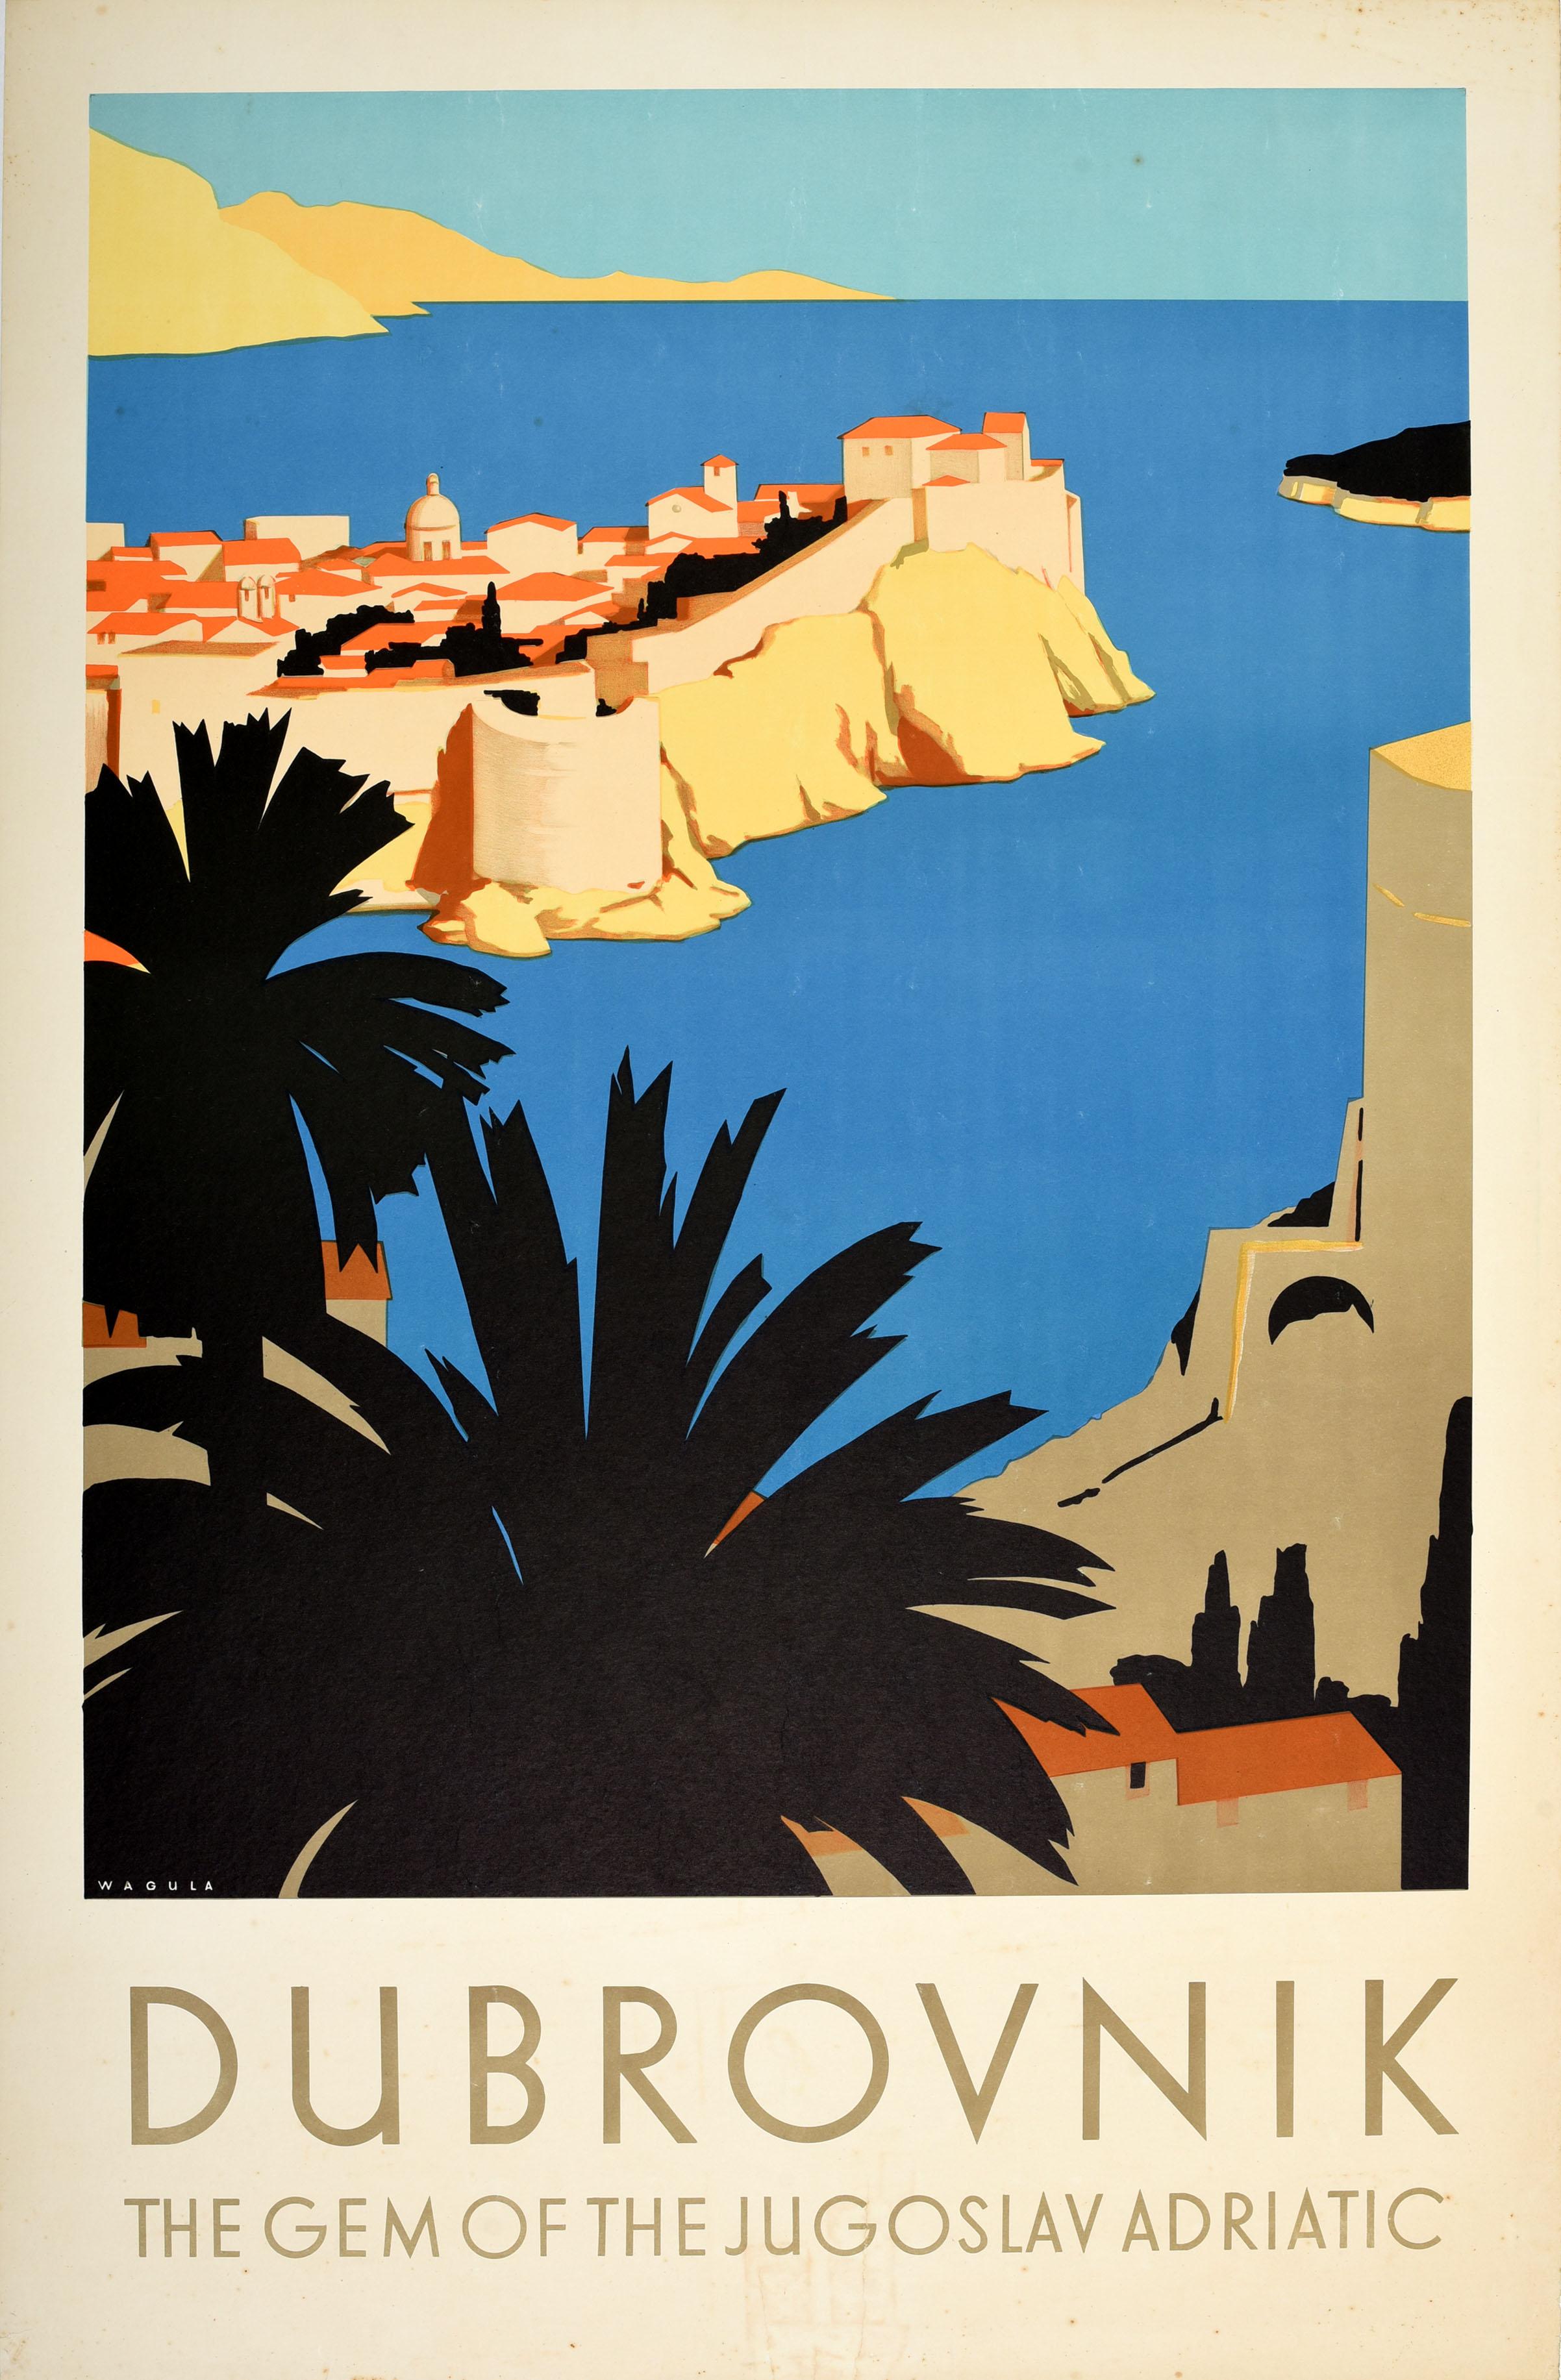 Hans Wagula Print – Original Vintage-Reiseplakat Dubrovnik Jugoslawien, Edelstein der Adriaküste, Original